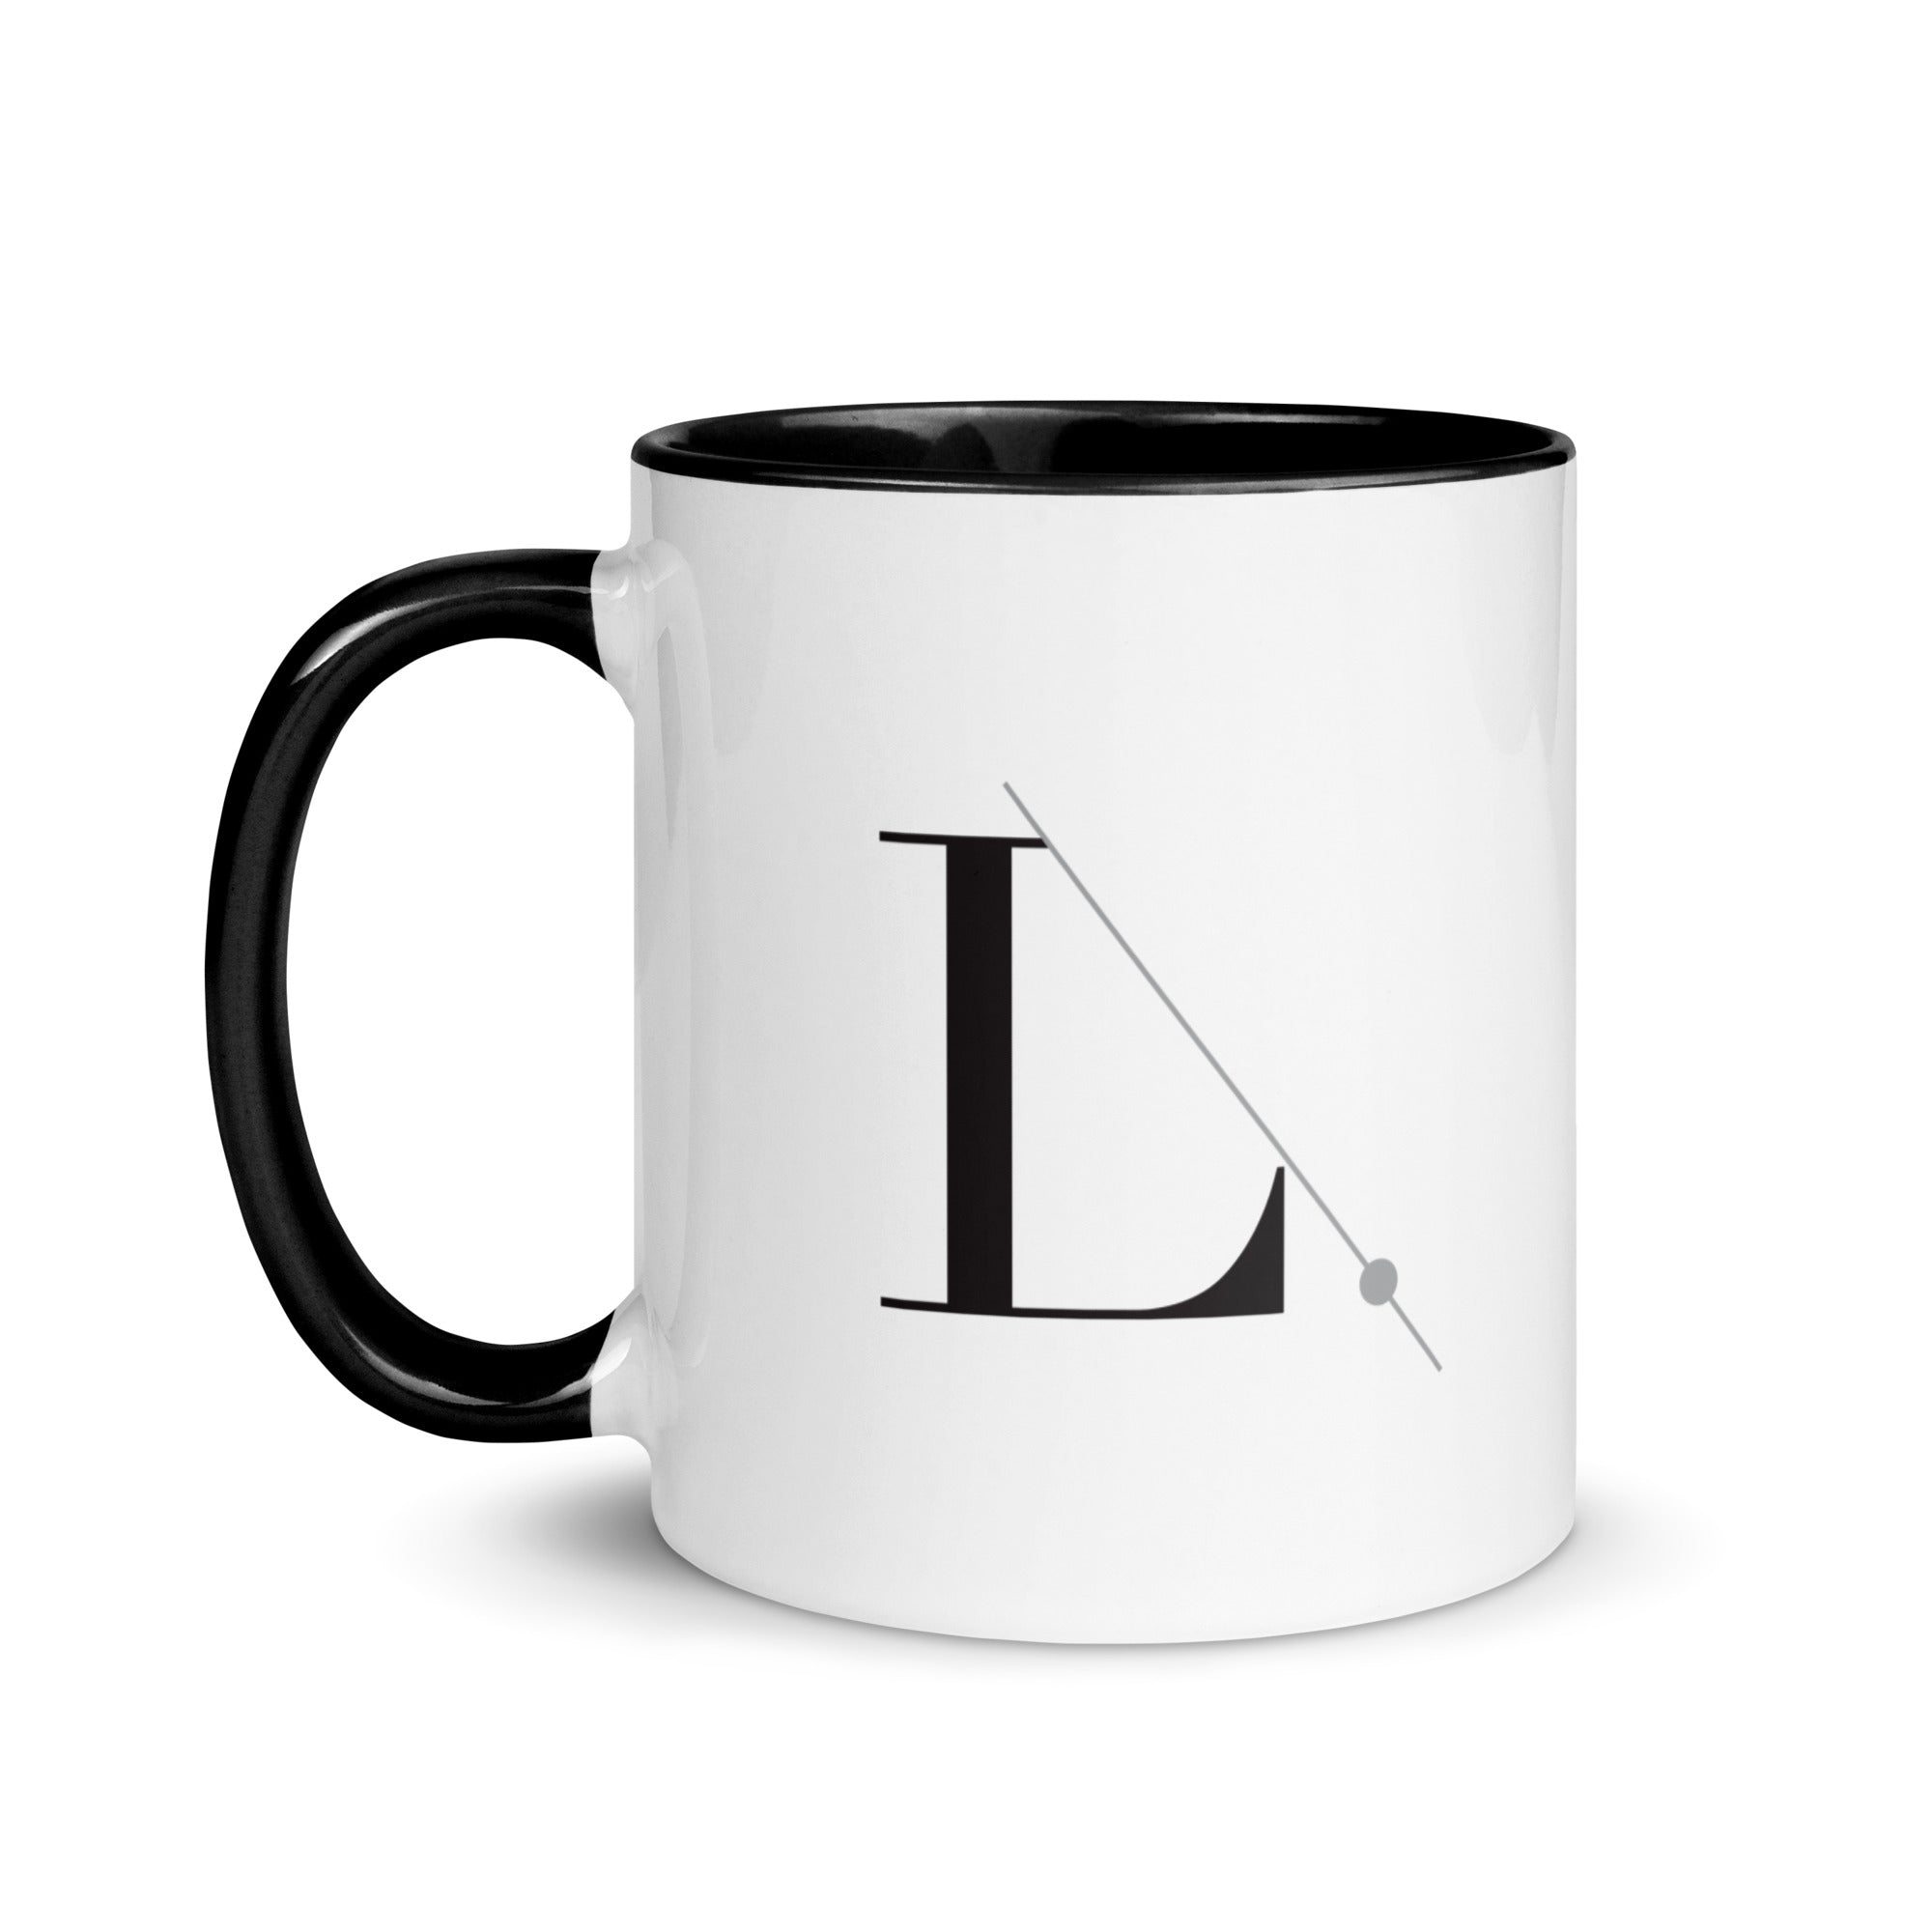 L Mug - Black inside and handle